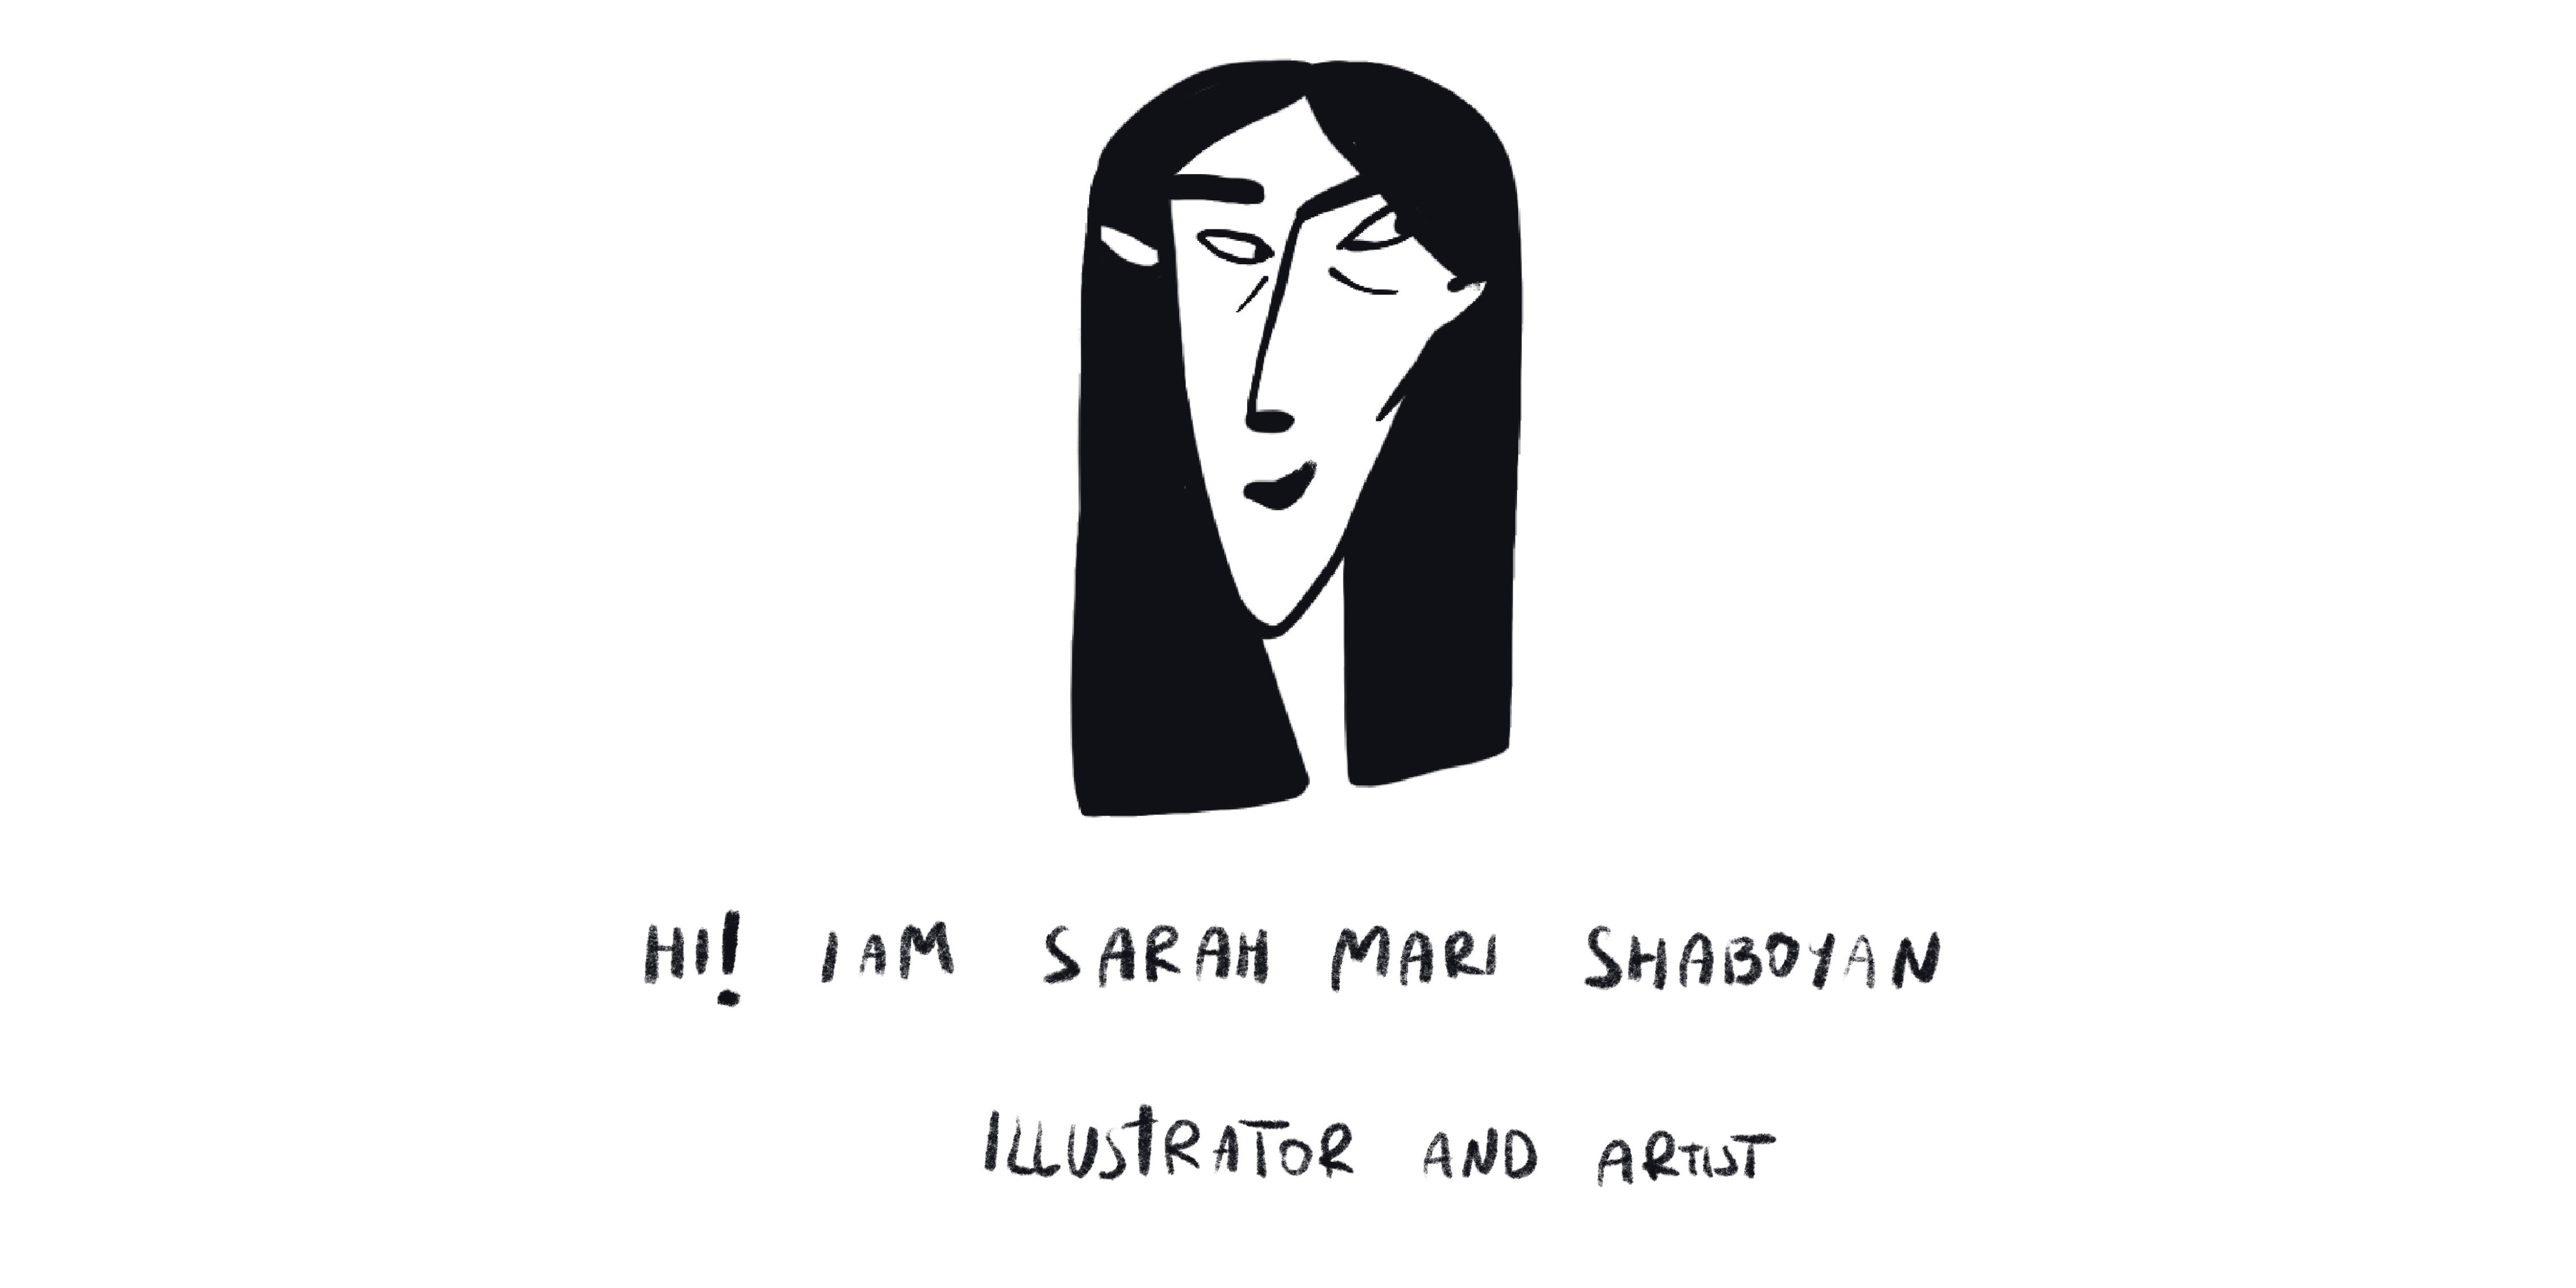 Conferencia Sarah Mari Shaboyan